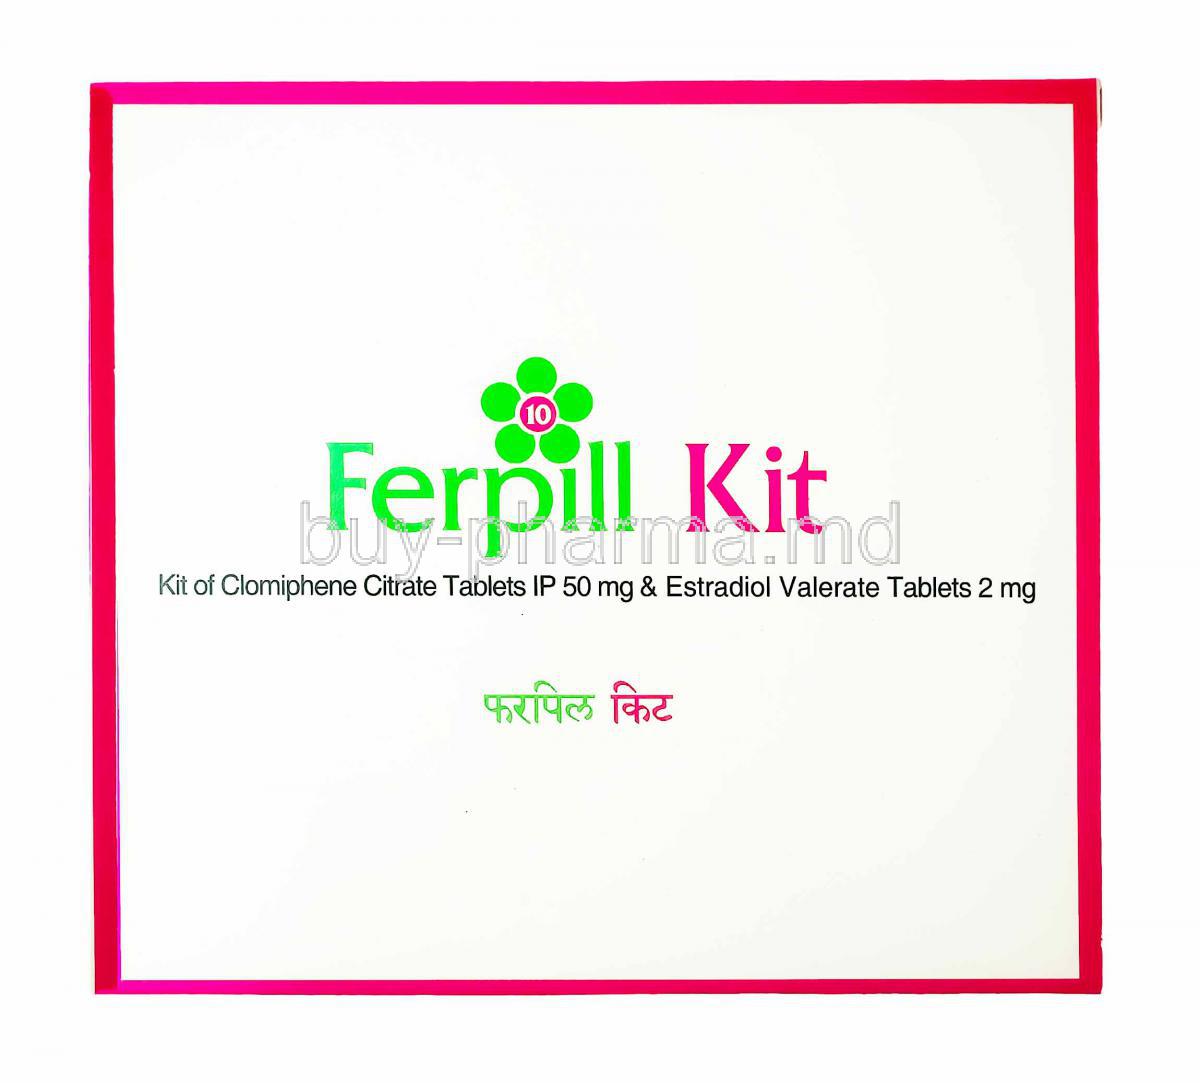 Ferpill Kit, Clomiphene and Estradiol Valerate